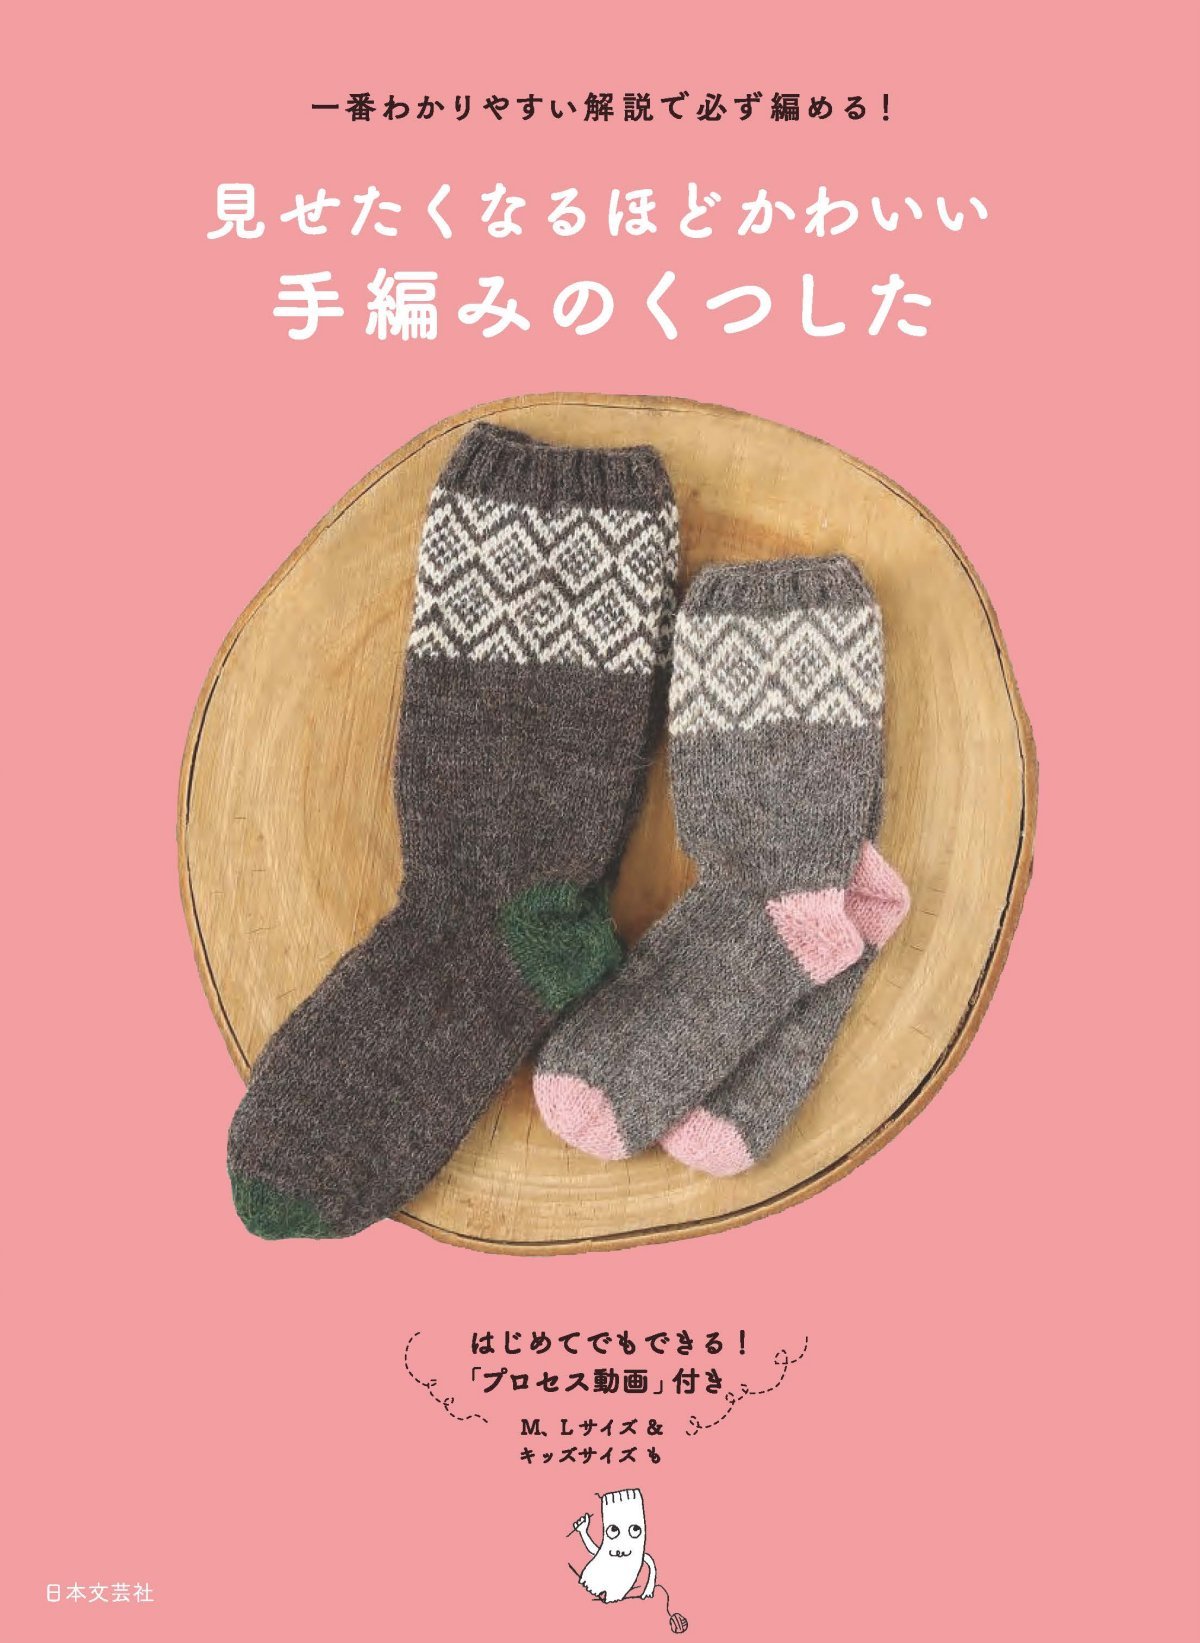 Hand-knitted socks book